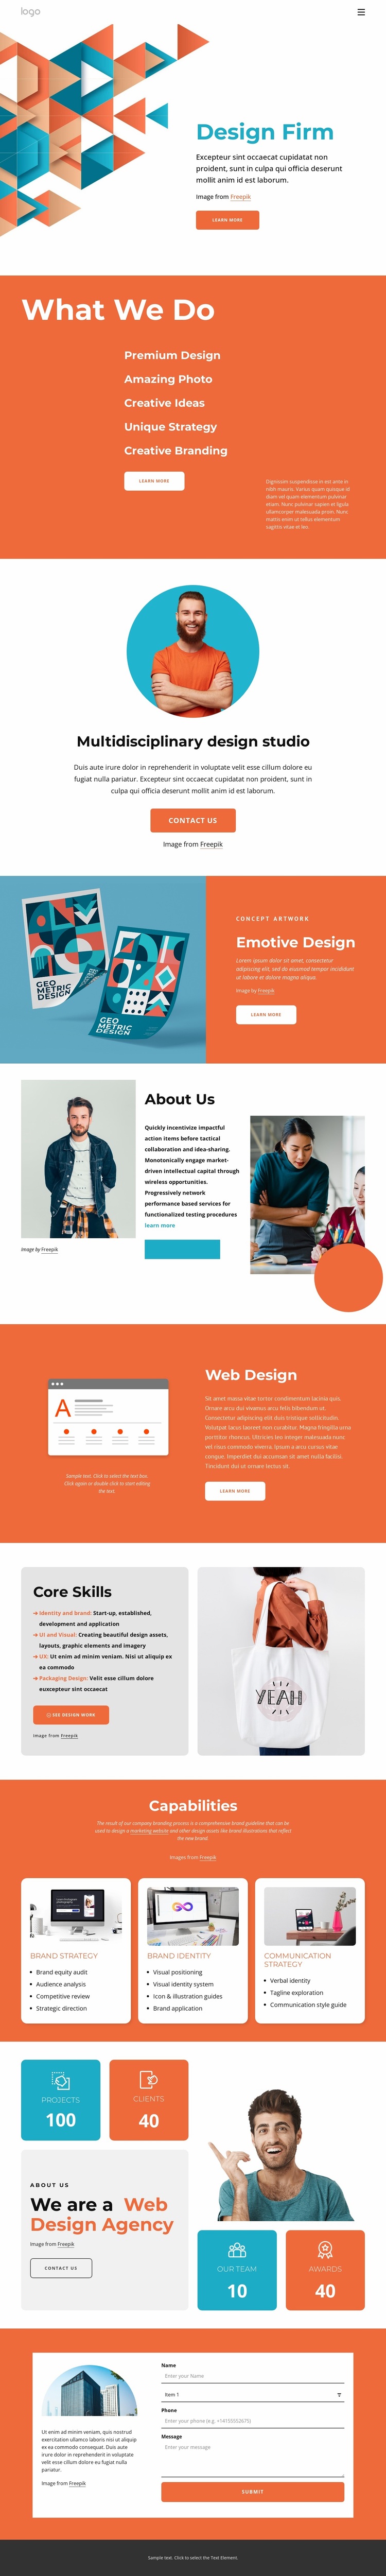 Creative ideas and great design Website Design